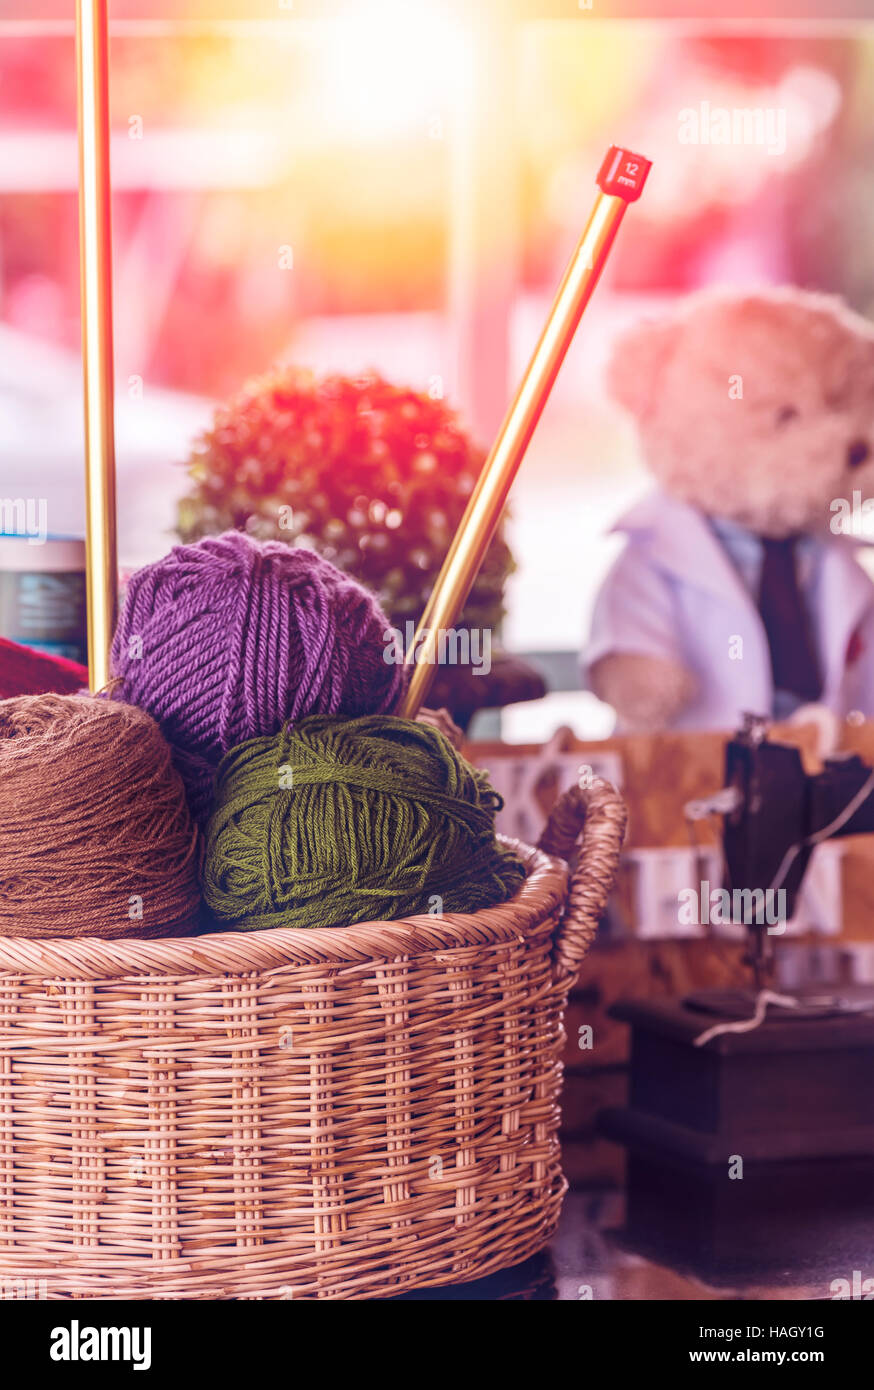 Knitting yarn balls and needles in basket Stock Photo